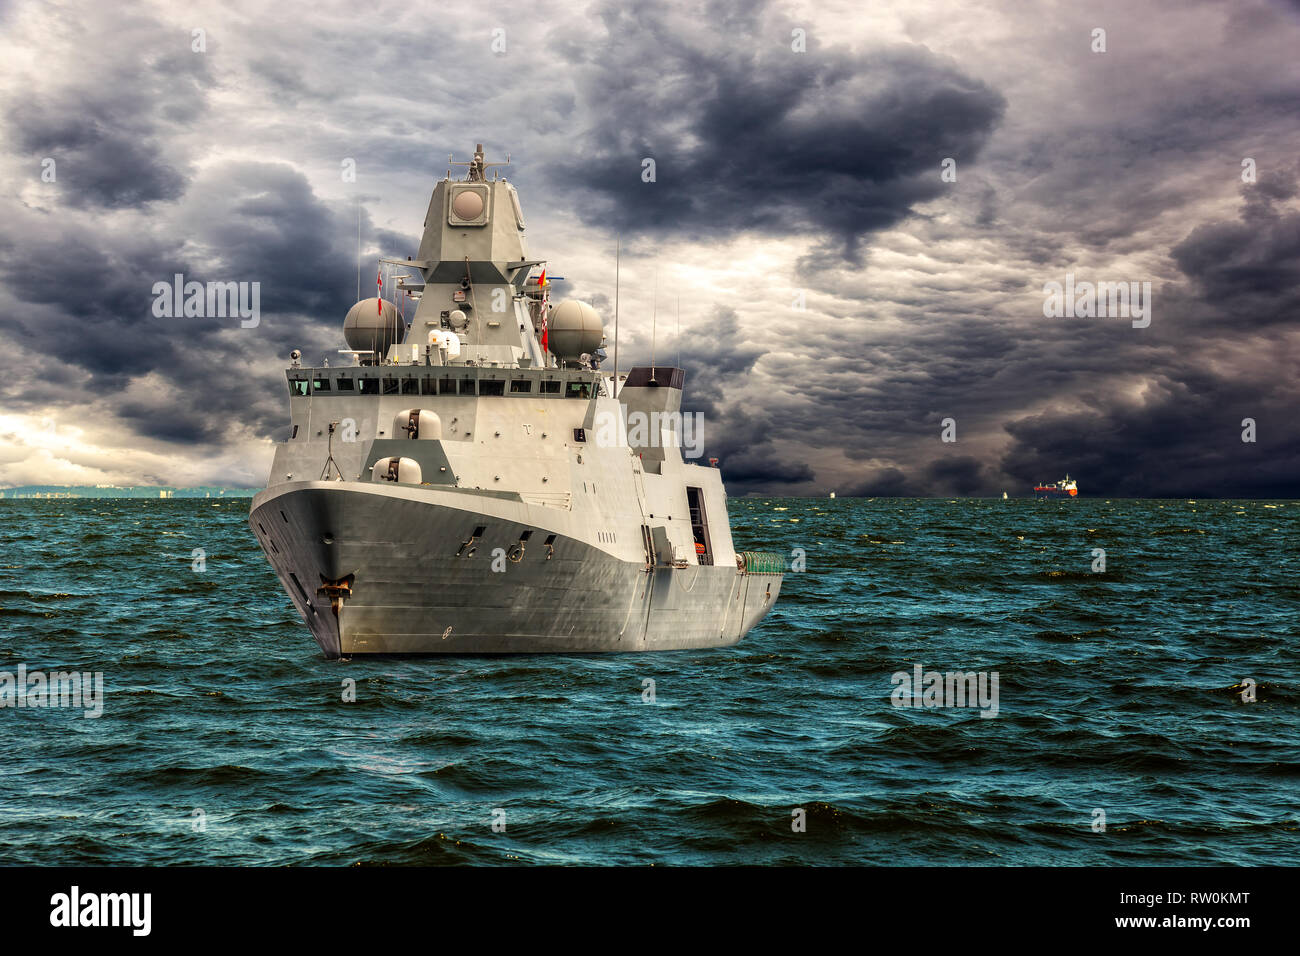 Warship on sea of dramatic scenery. Stock Photo